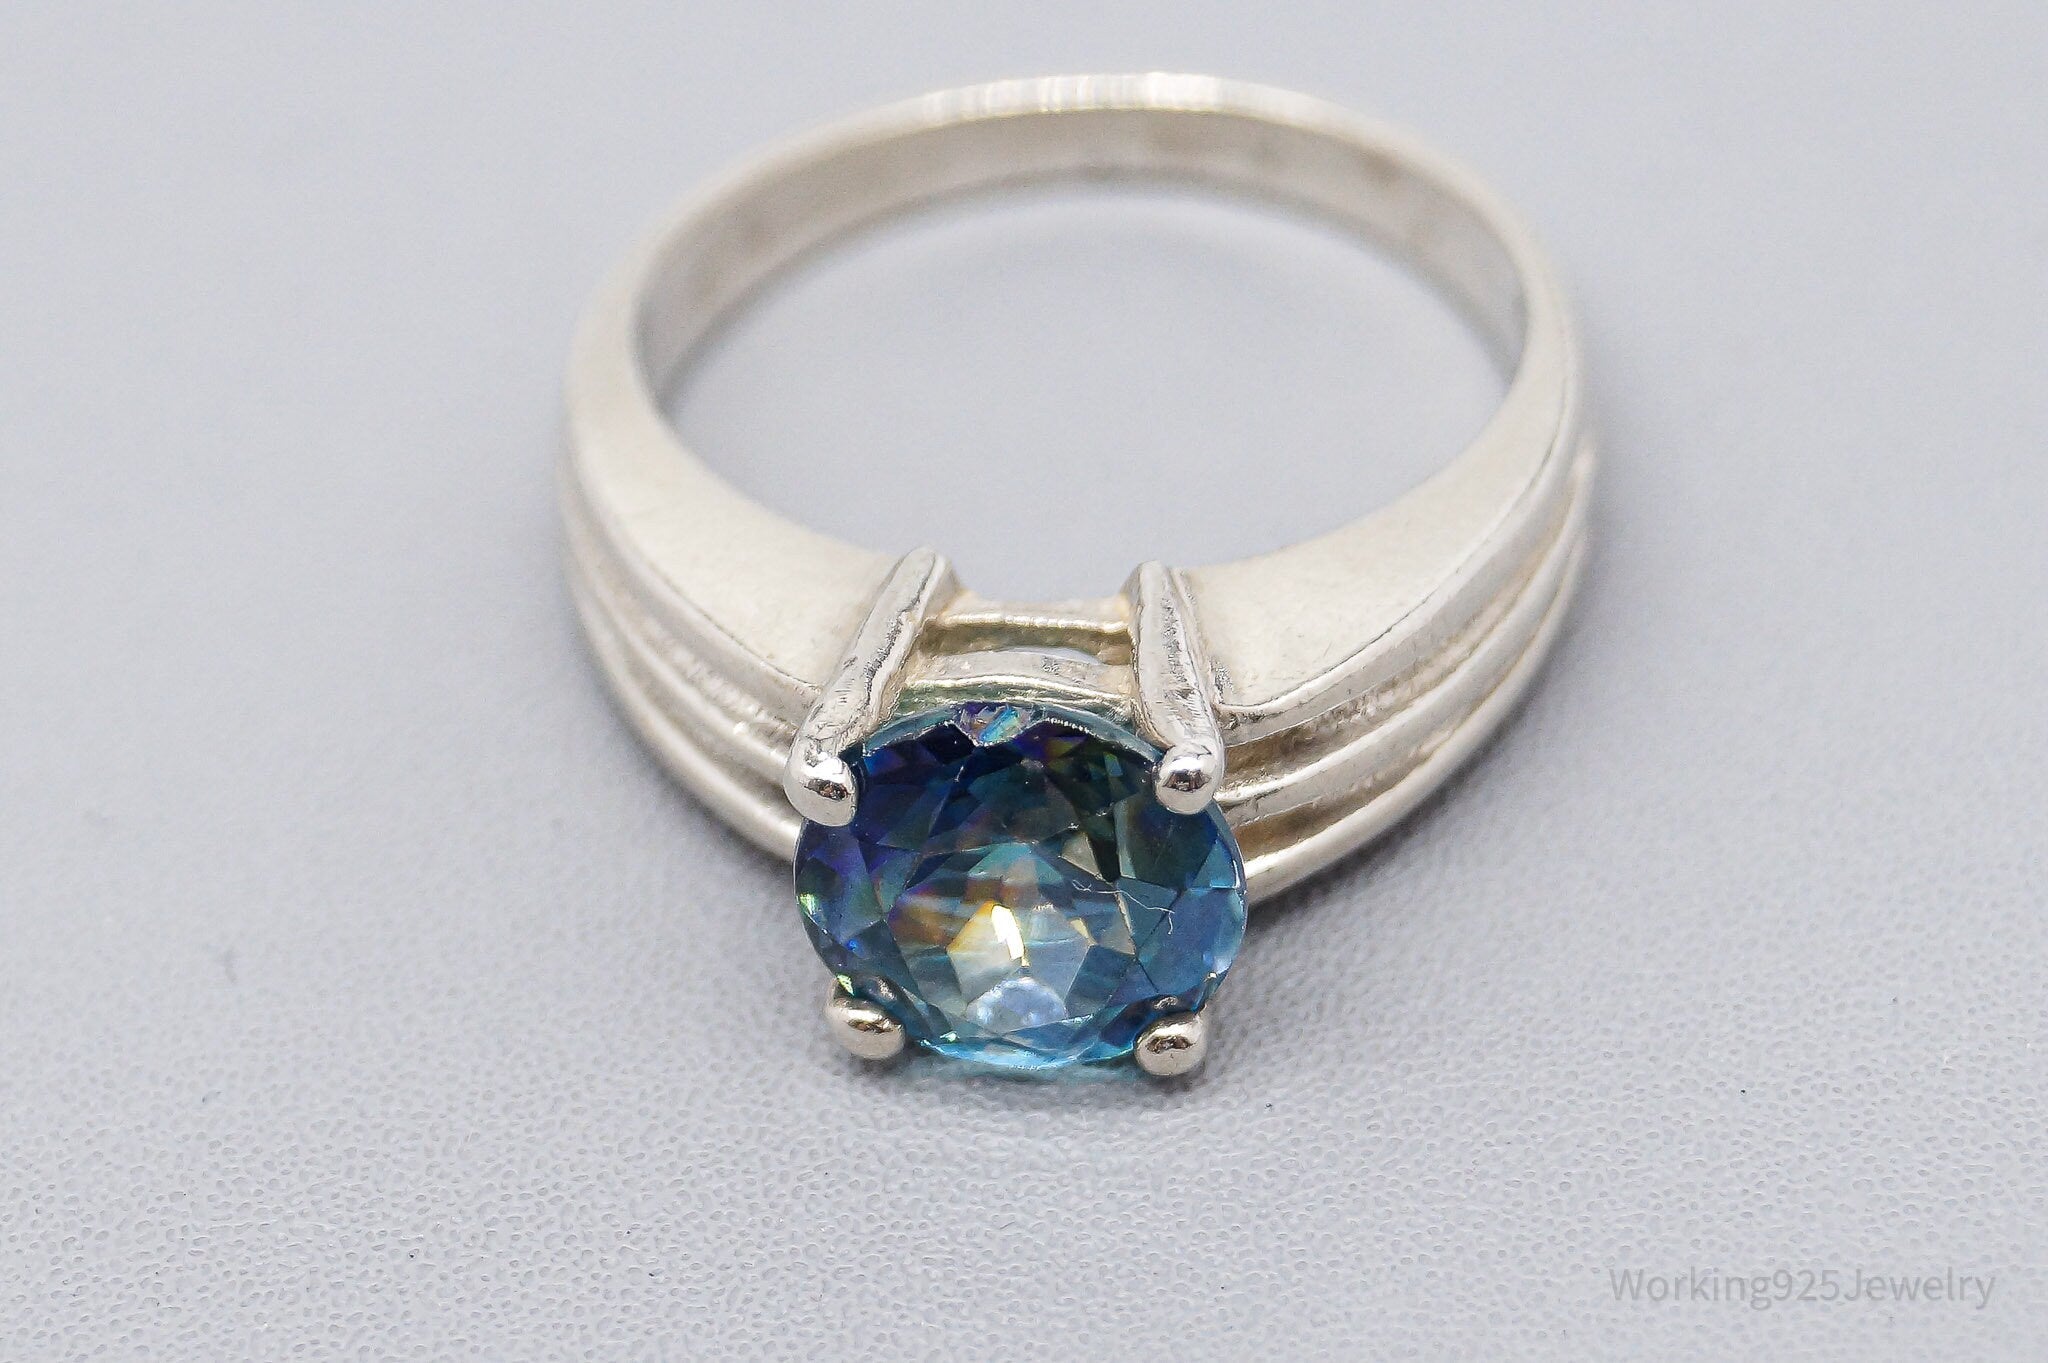 Vintage Blue Mystic Topaz Sterling Silver Ring - Size 6.25